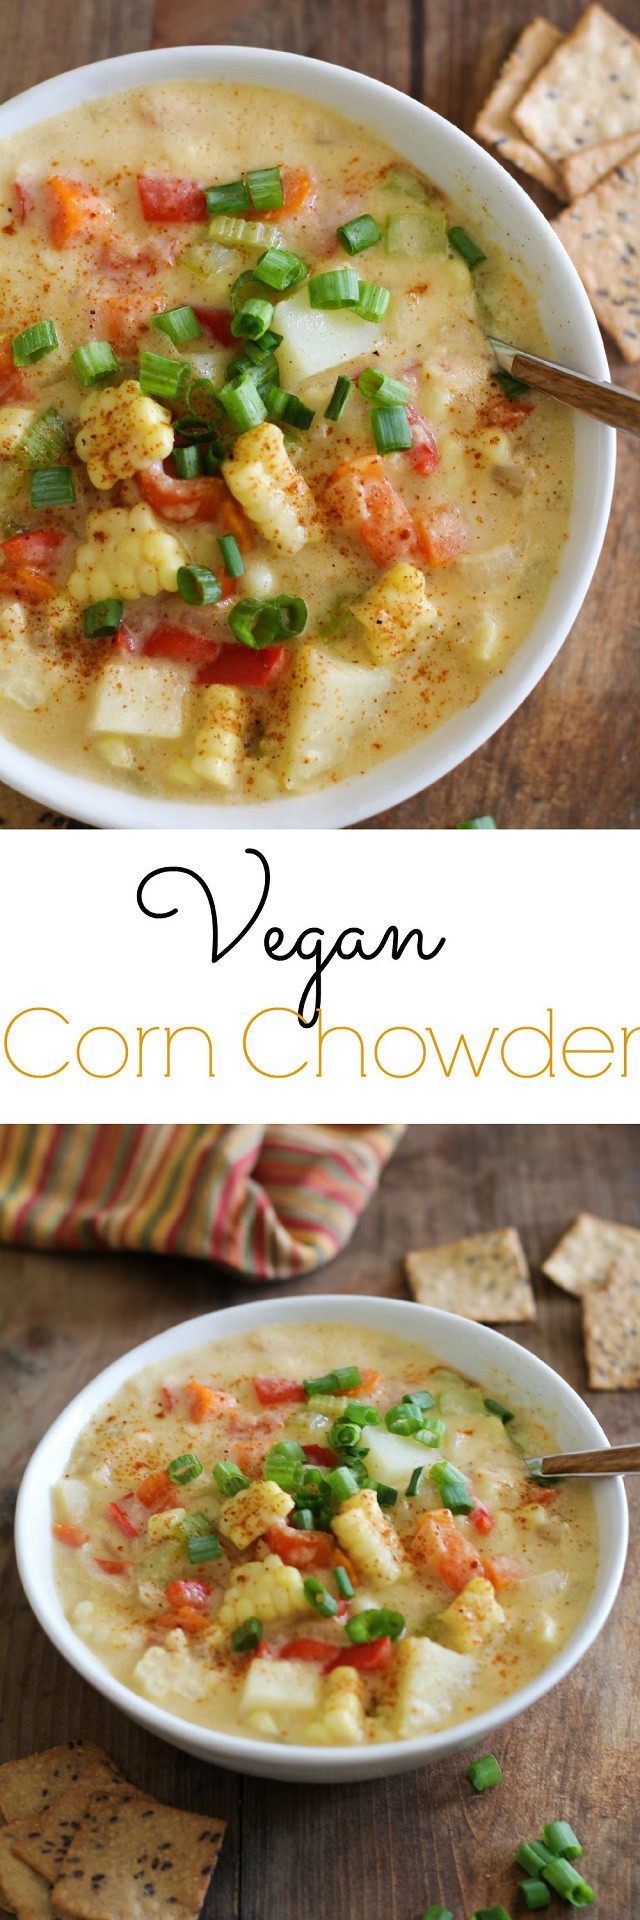 Corn Chowder Vegan
 Vegan Corn Chowder The Roasted Root